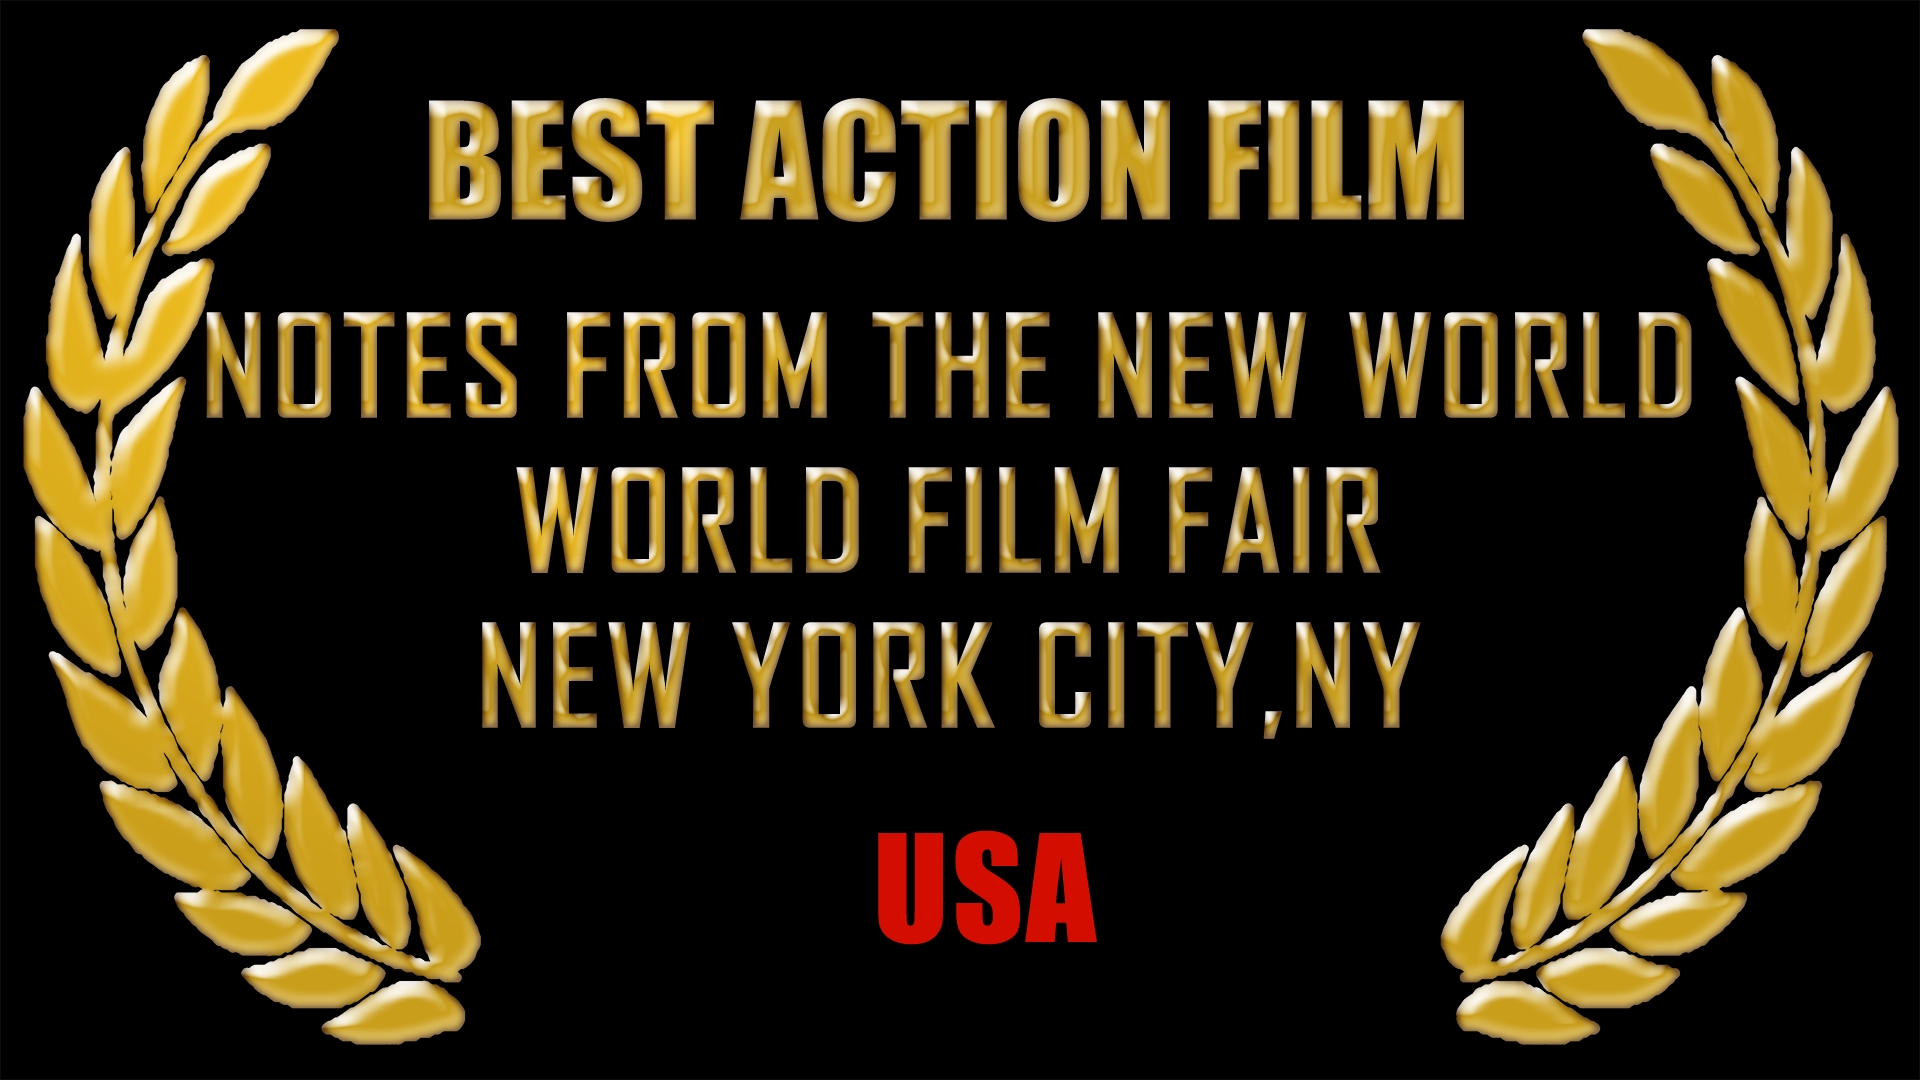 Best Action Film, USA